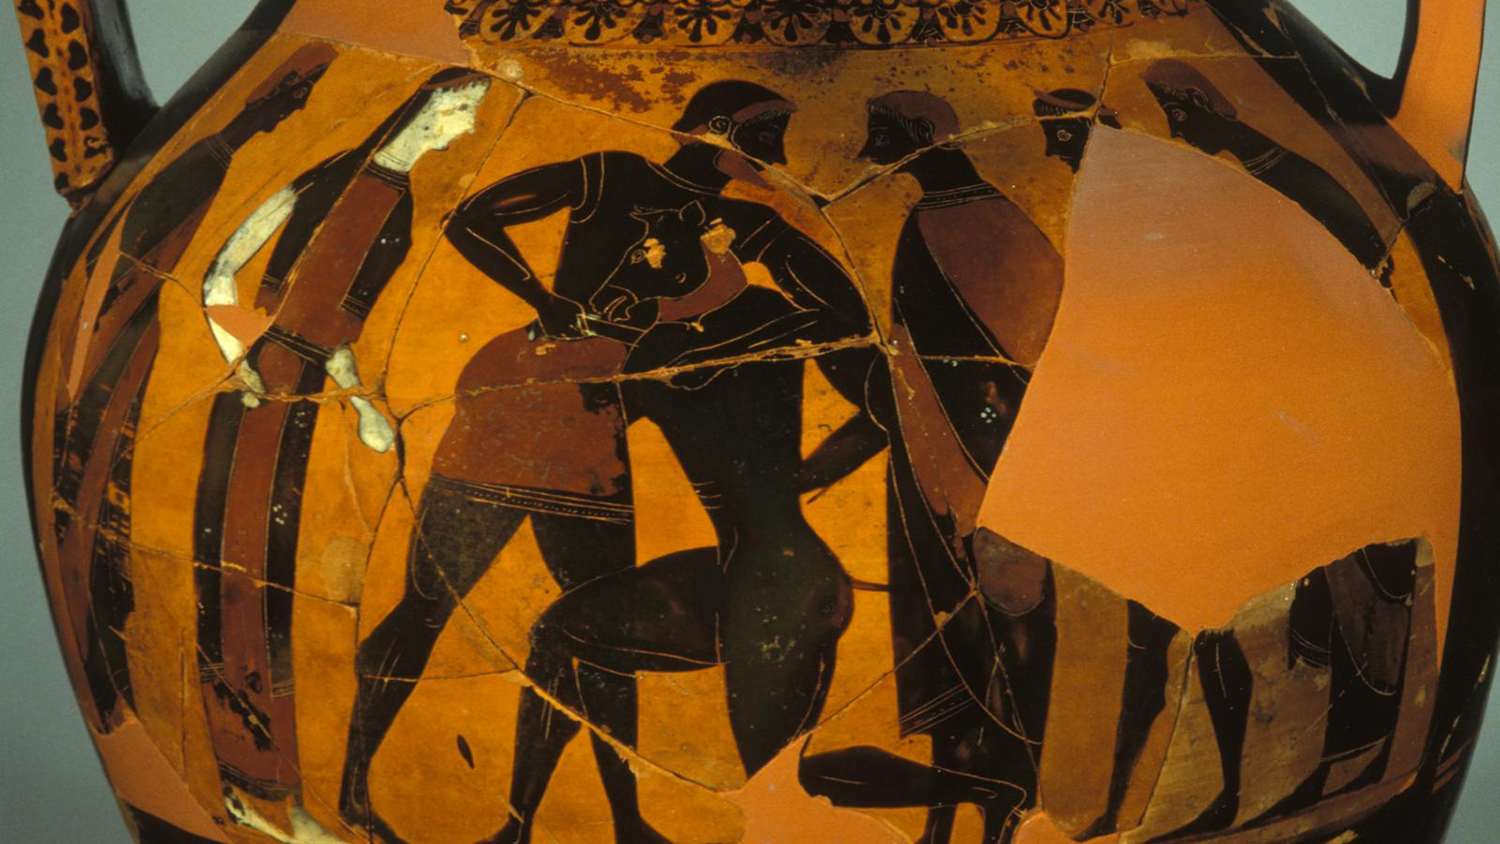 Amphora depicting Theseus and Minotaur with five onlookers.